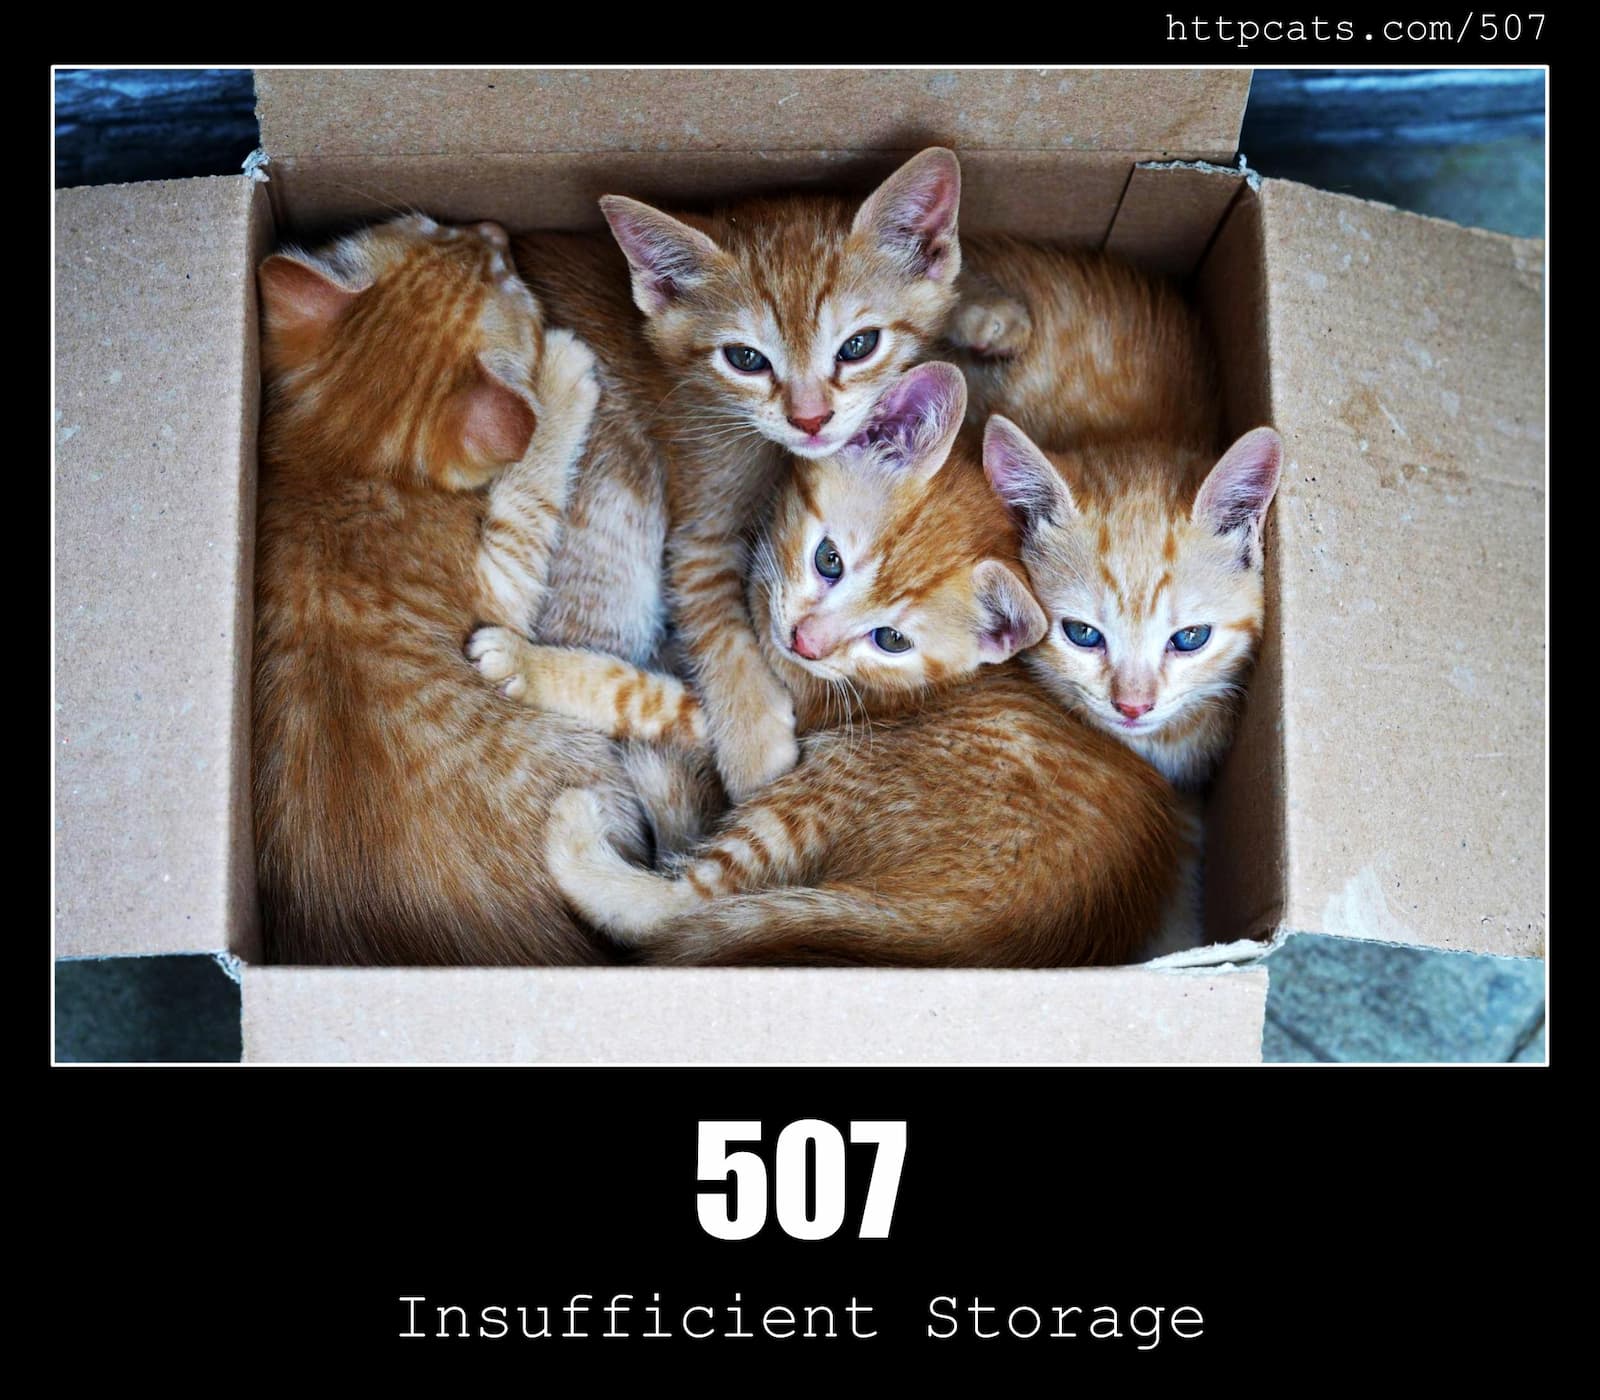 HTTP Status Code 507 Insufficient Storage & Cats